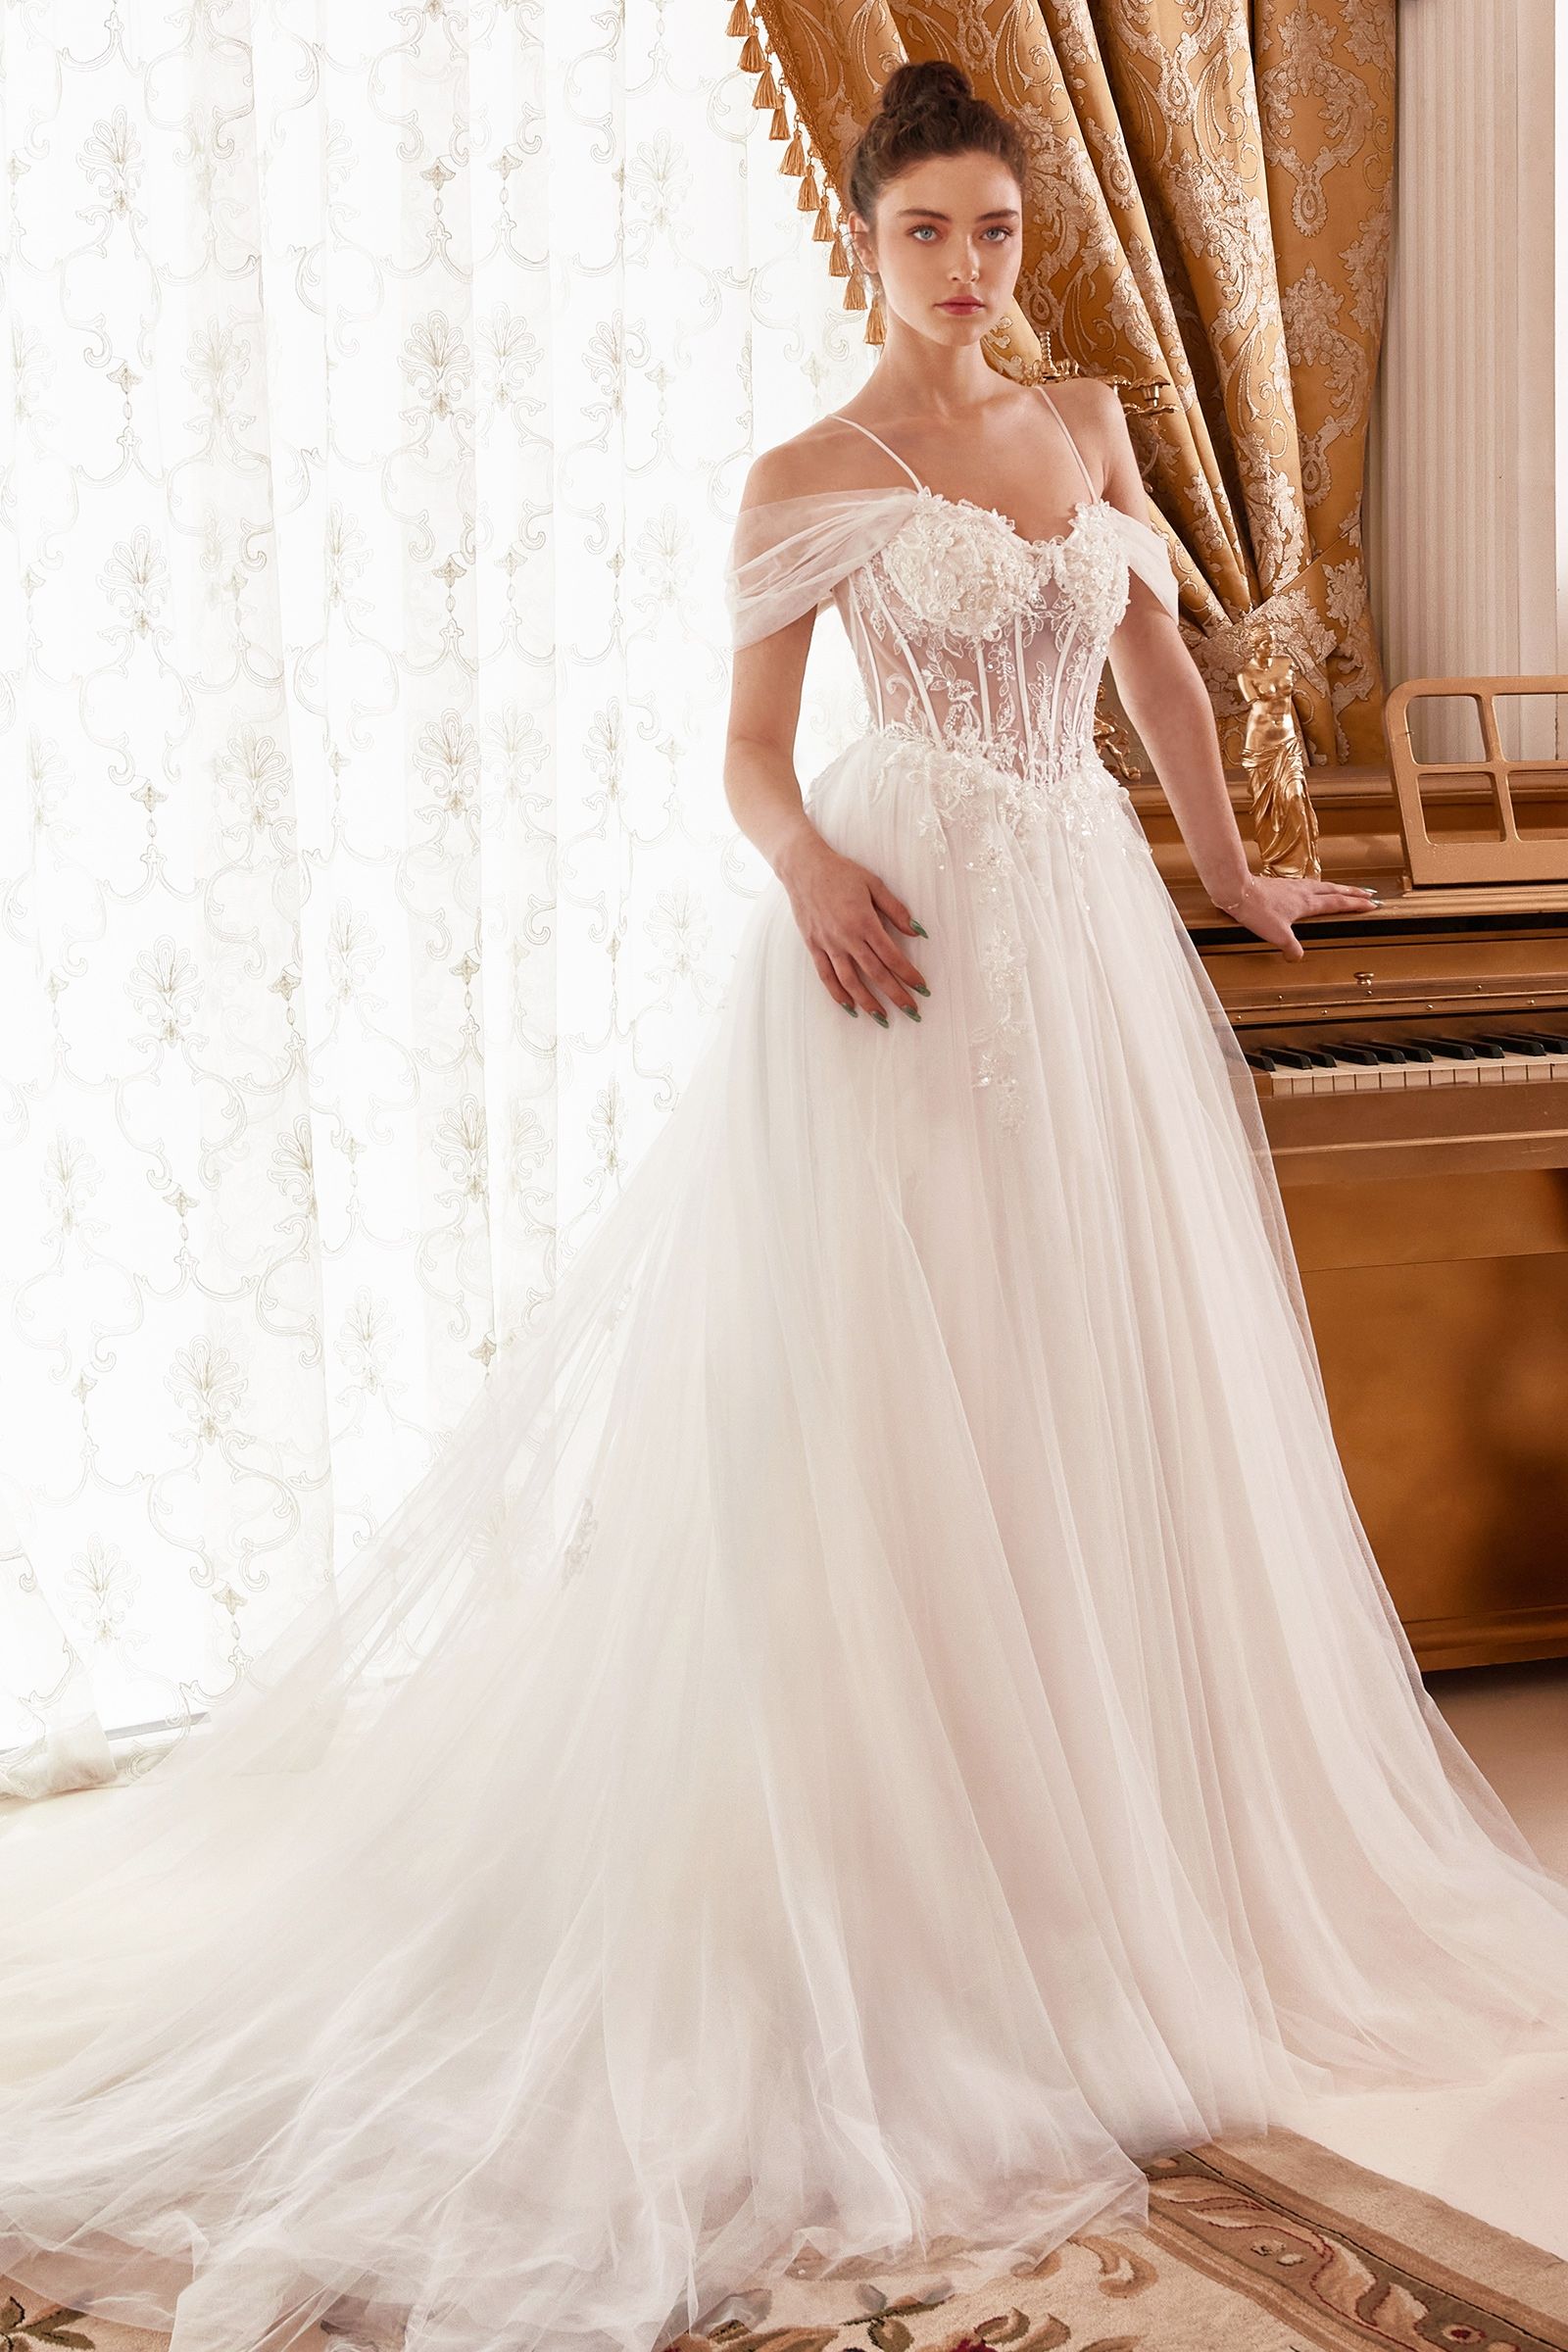 Buy Bride Wedding Dress Women Off The Shoulder Glitter Sequin Ball